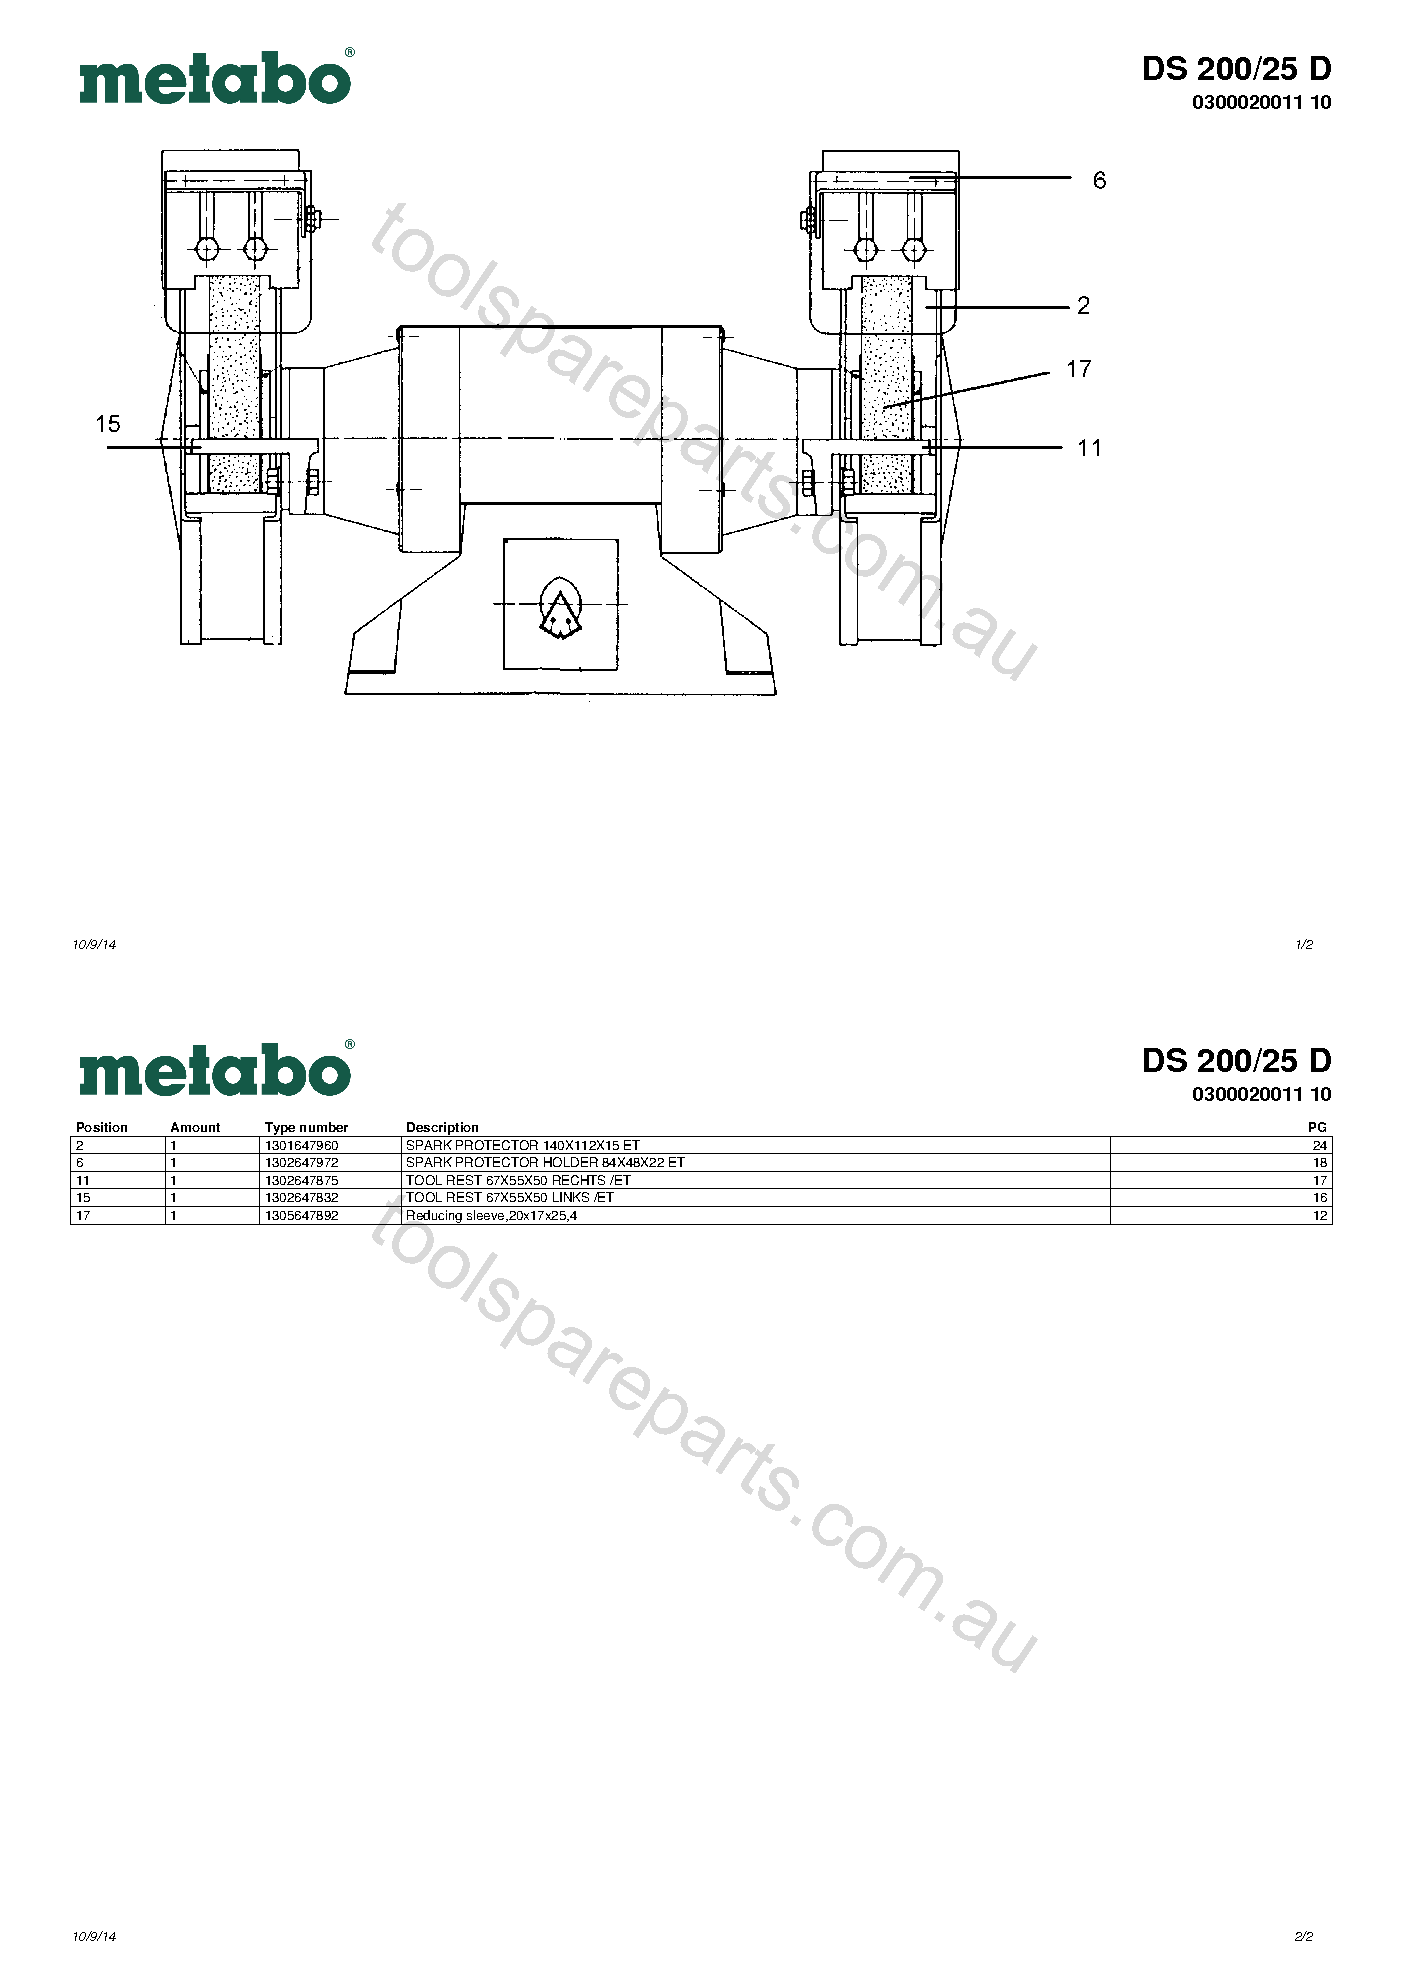 Metabo DS 200/25 D 0300020011 10  Diagram 1